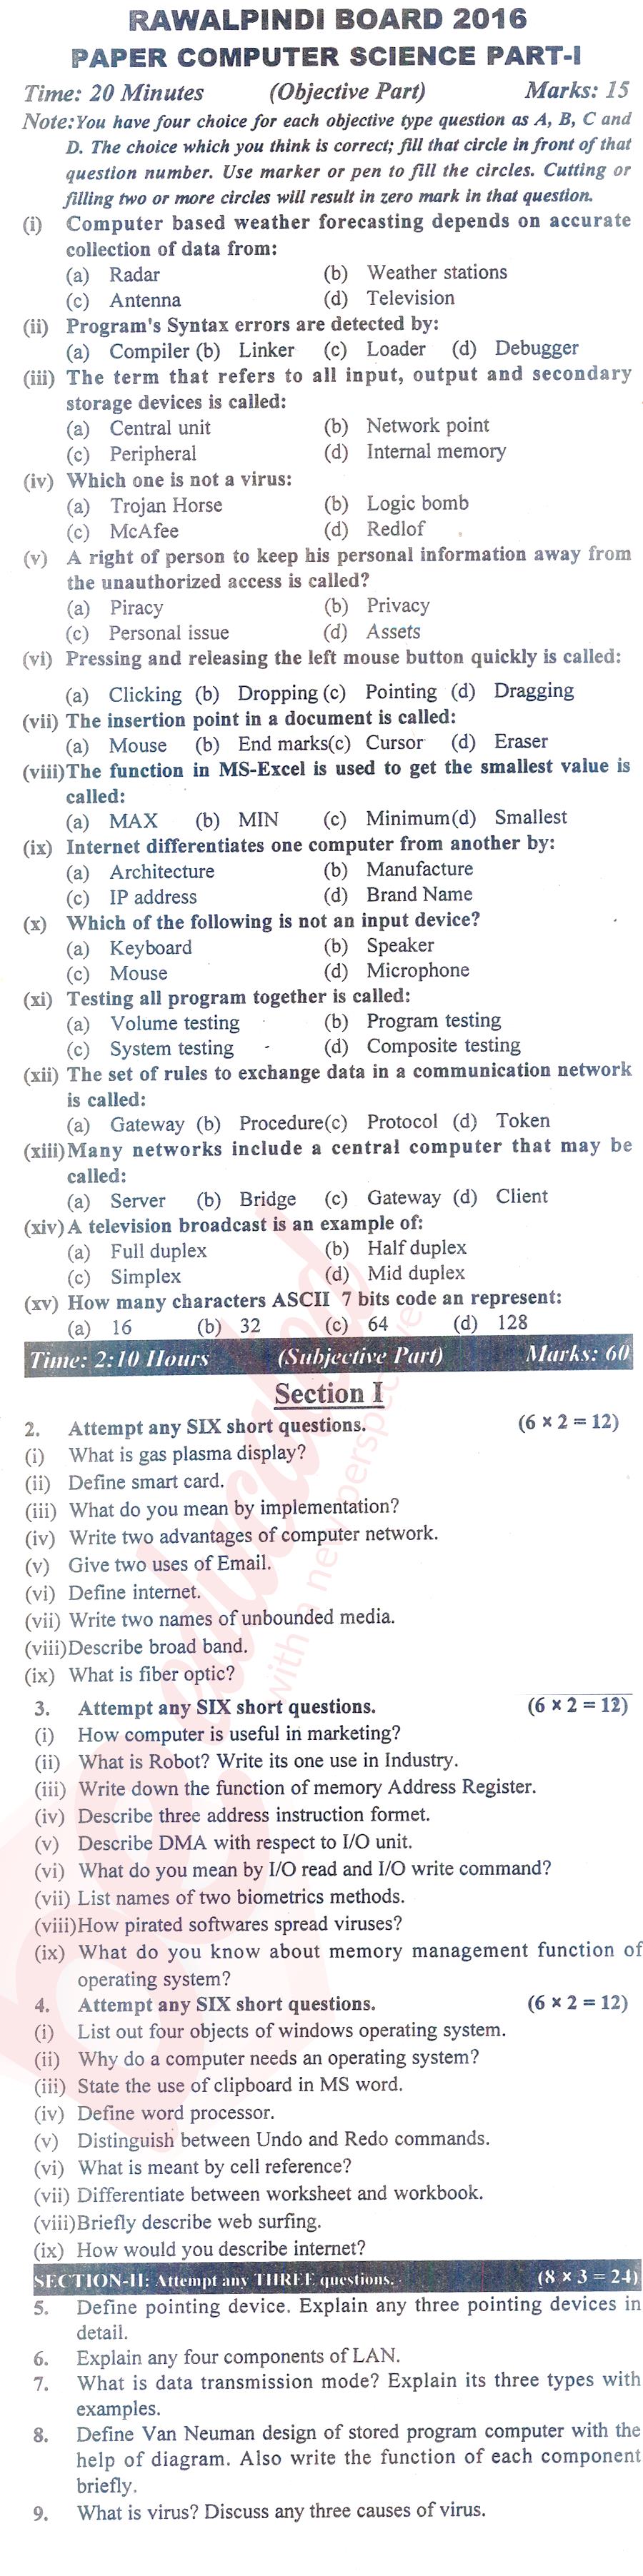 Computer Science ICS Part 1 Past Paper Group 1 BISE Rawalpindi 2016